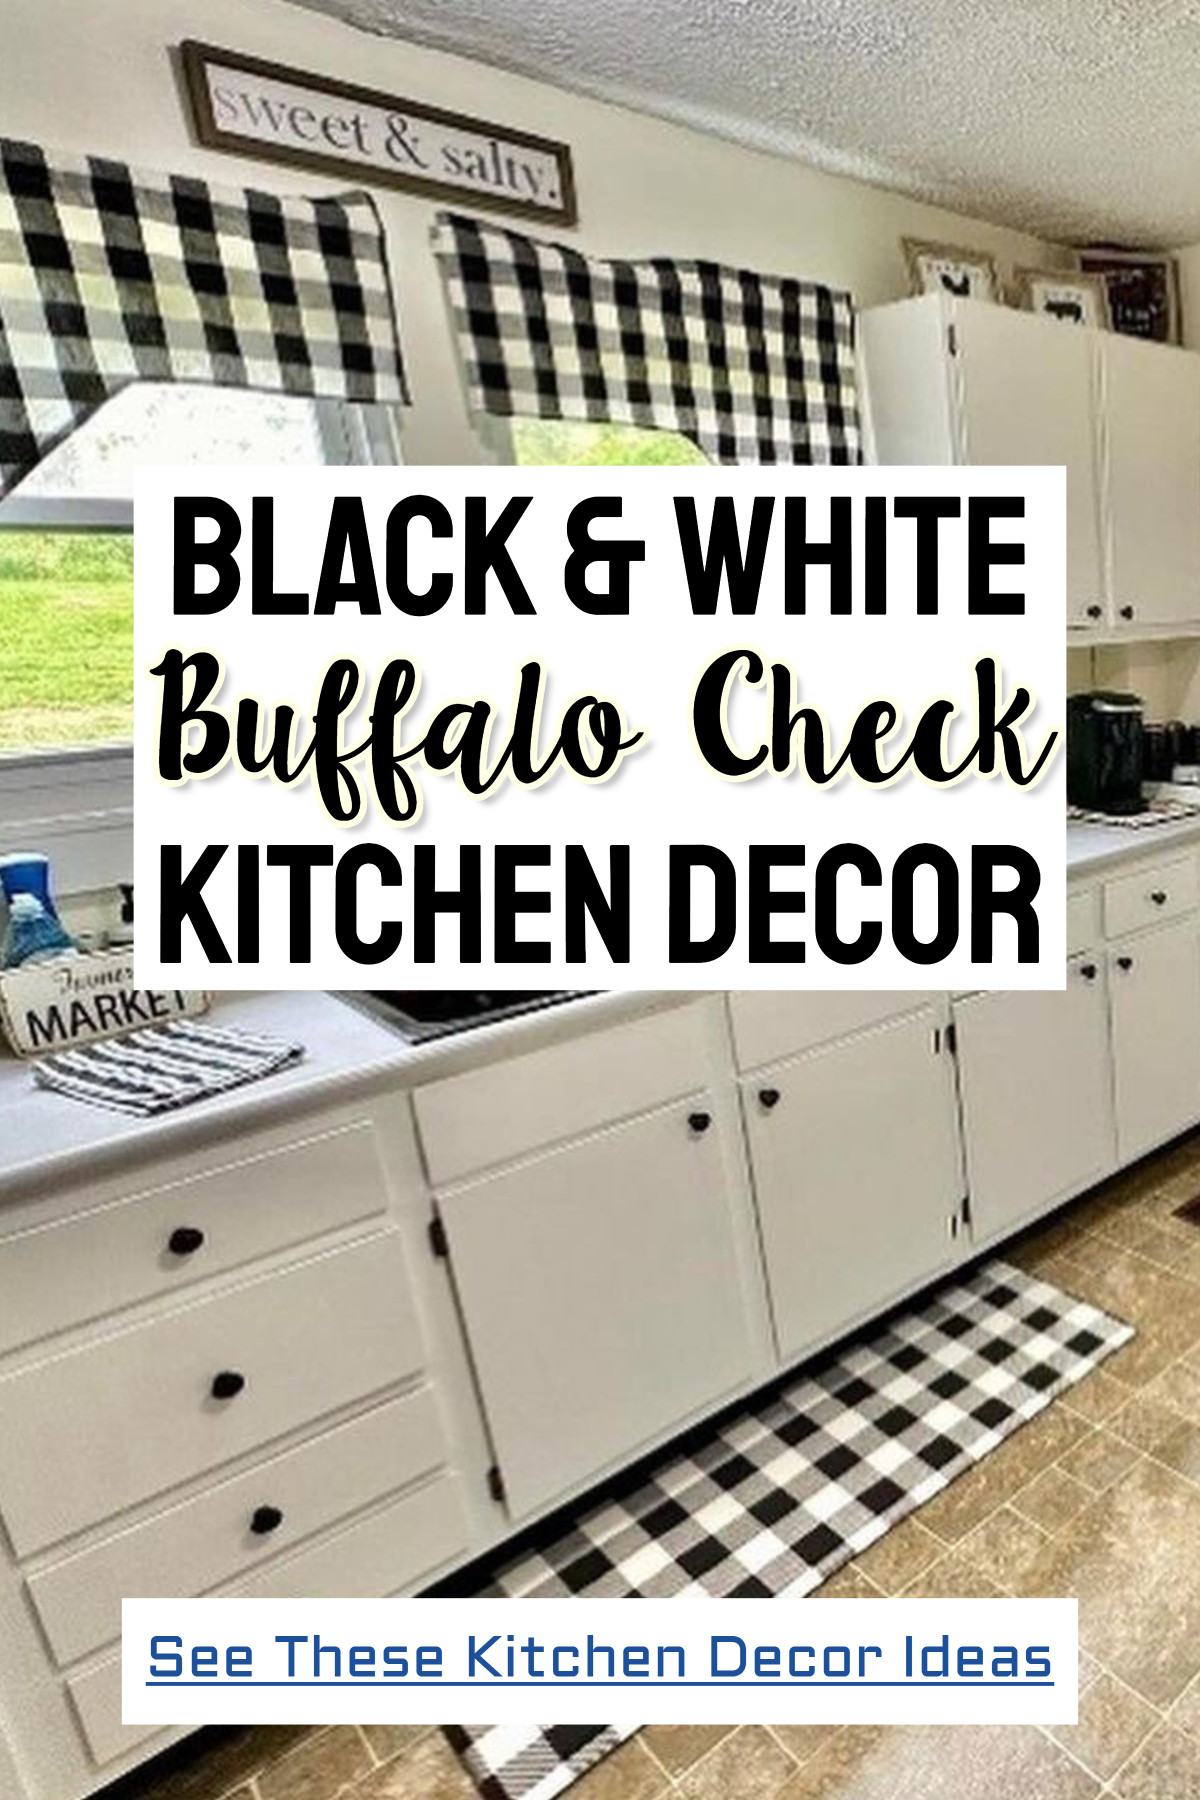 Black and White Buffalo Check Kitchen Decor ideas